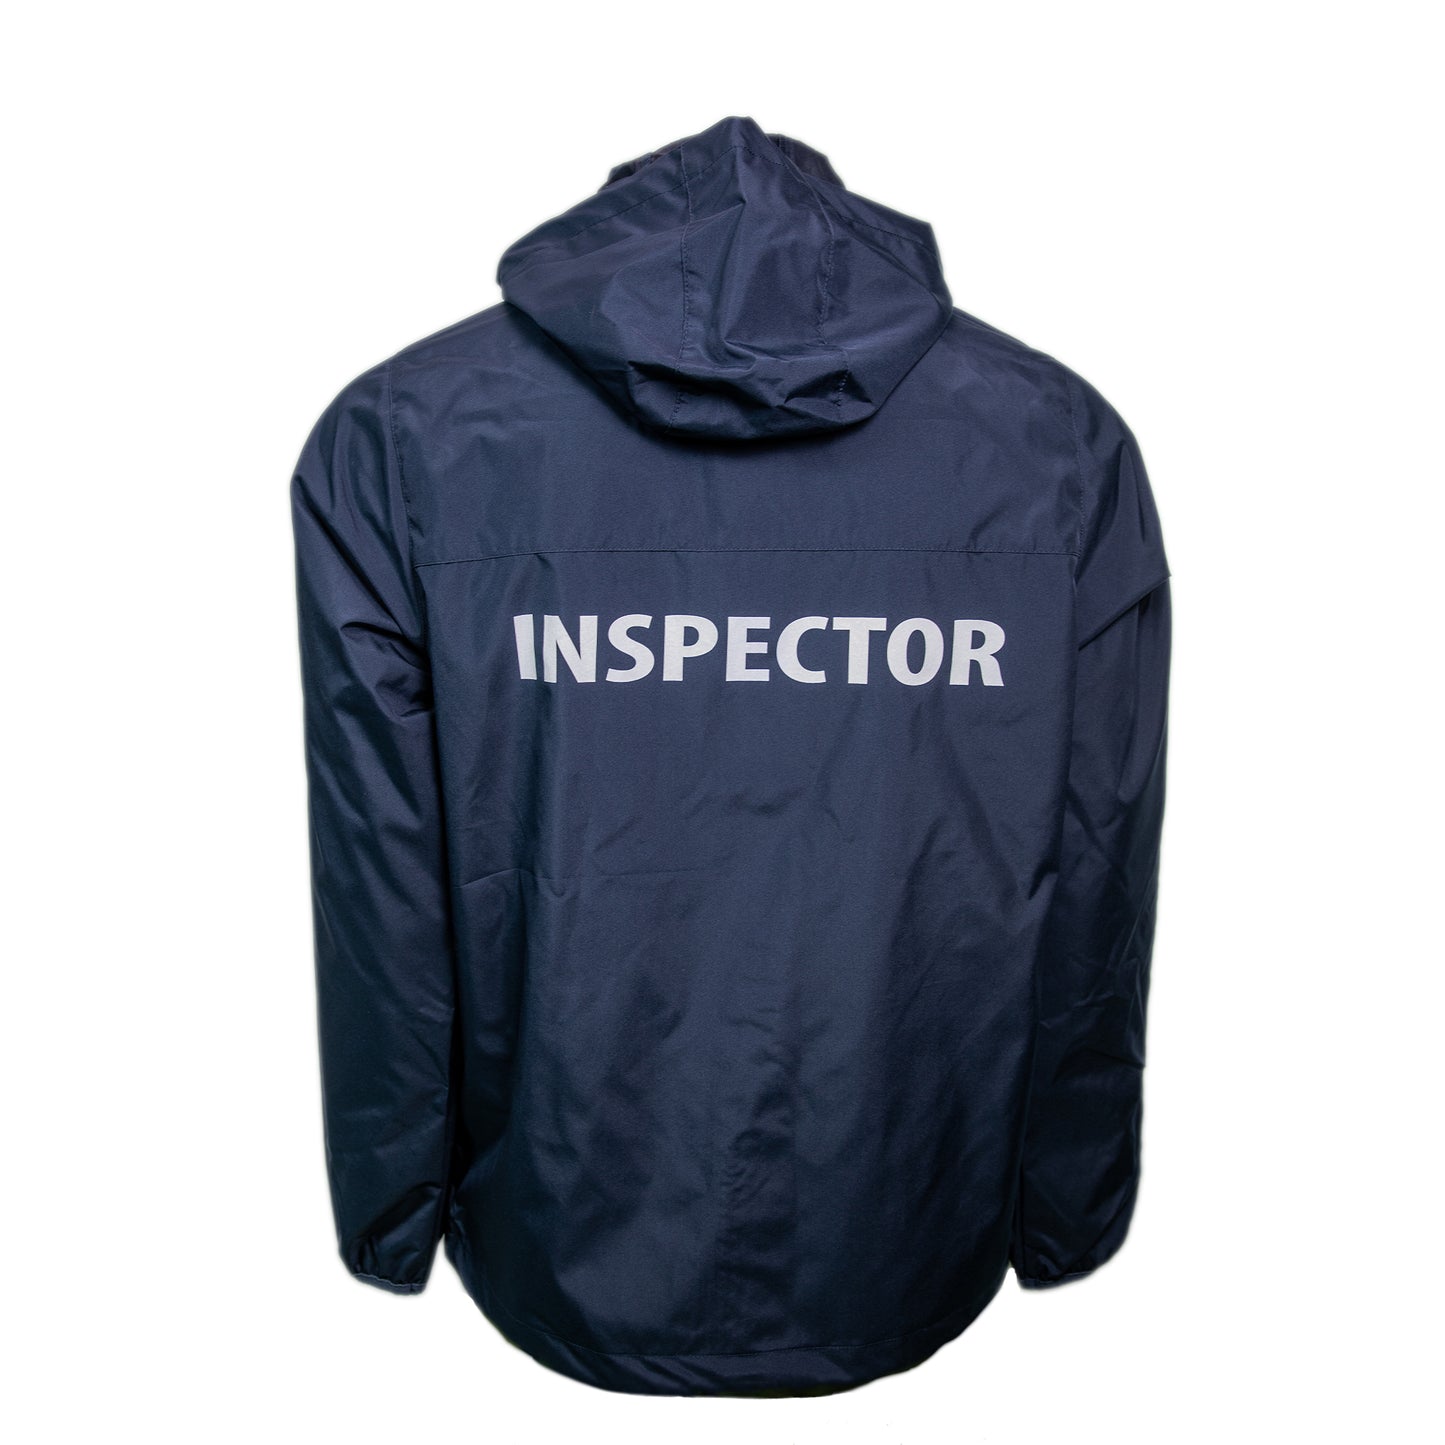 InterNACHI® “INSPECTOR” Jacket